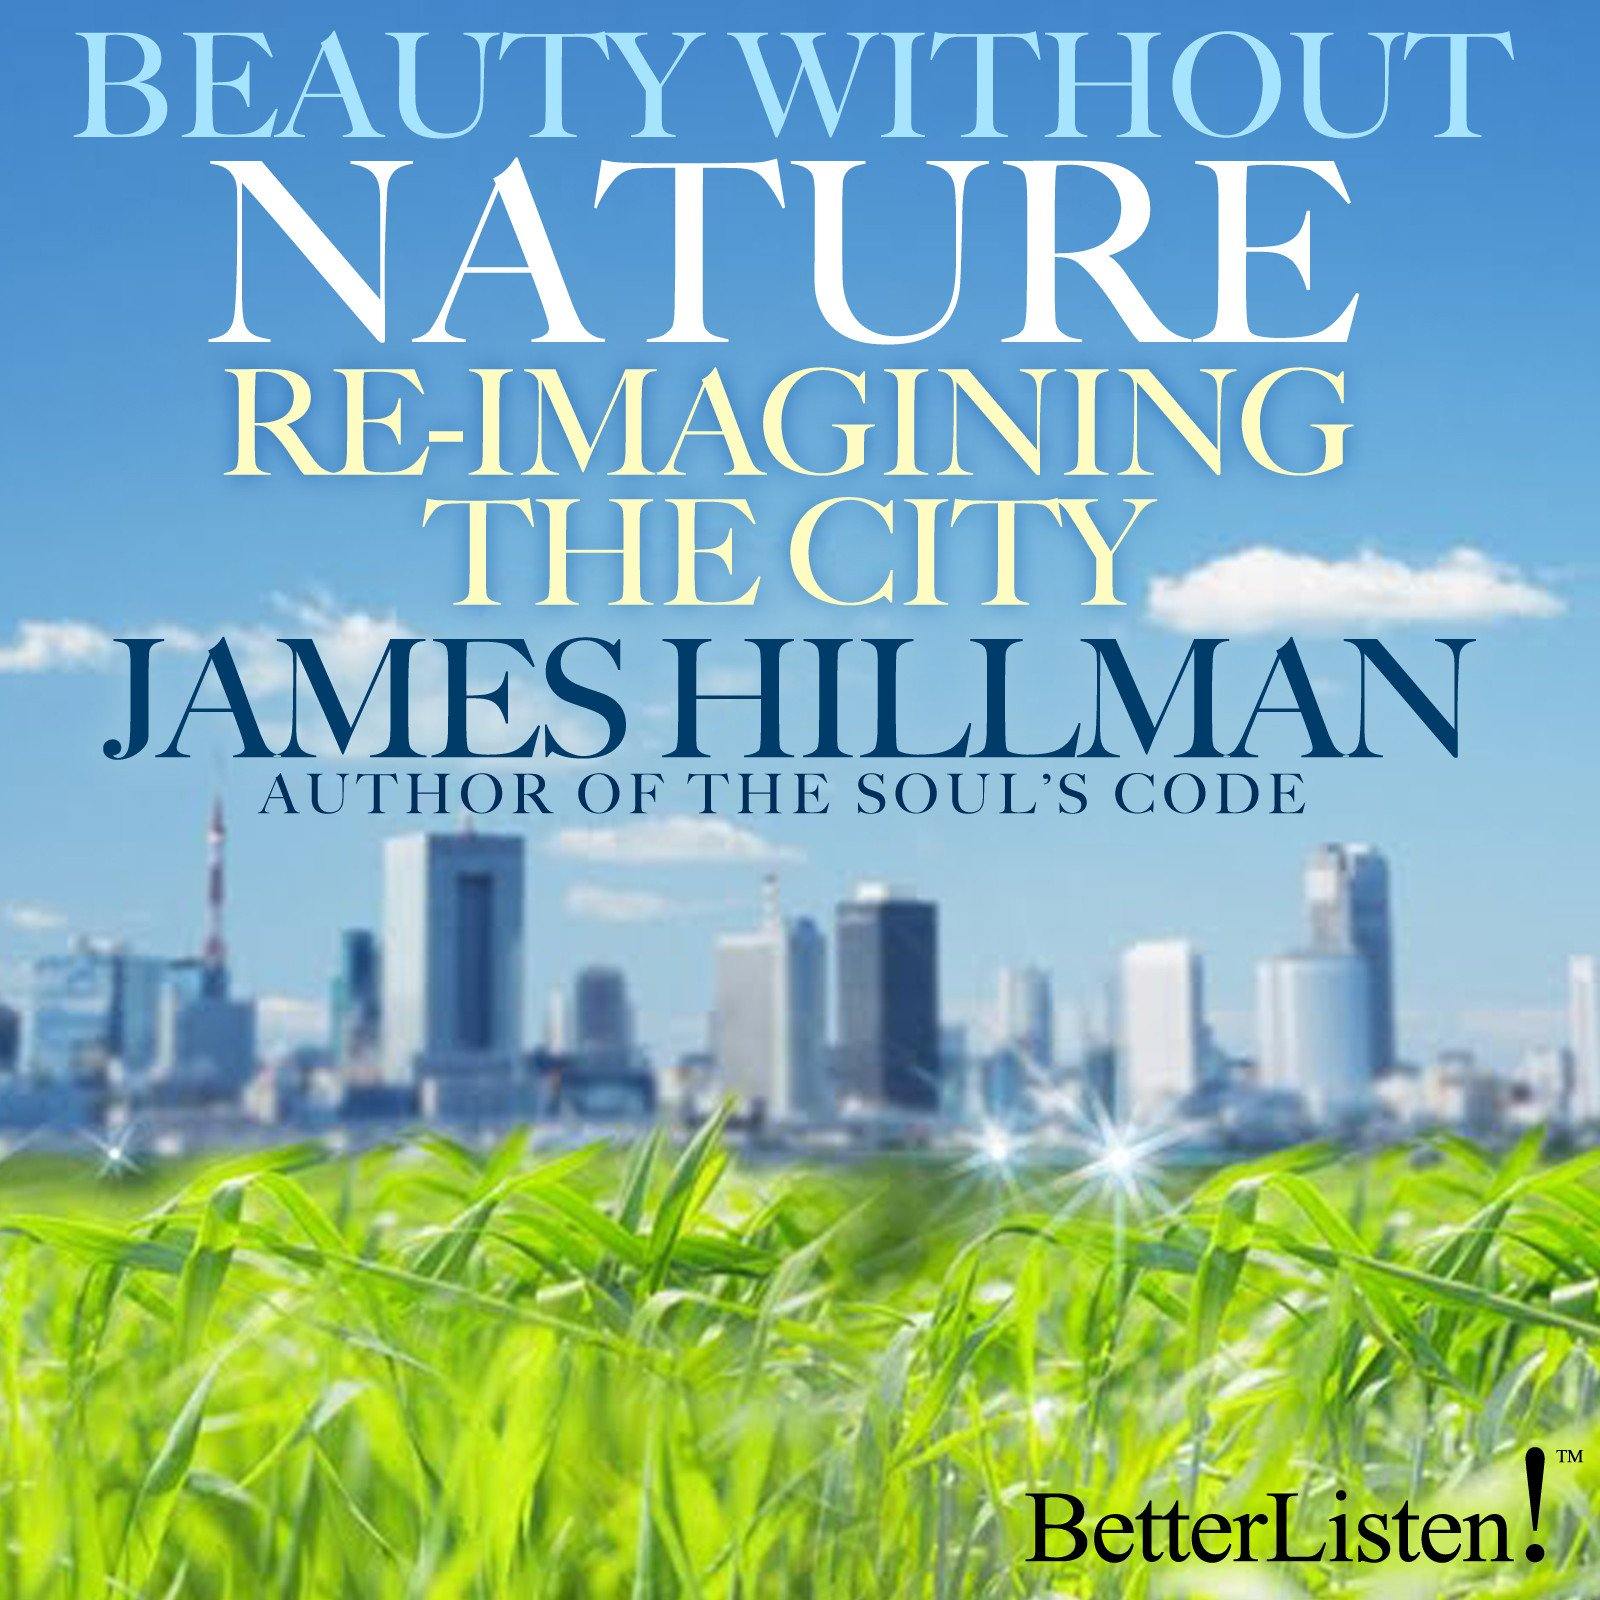 Beauty Without Nature Re-imagining the City by James Hillman Audio Program James Hillman - BetterListen!